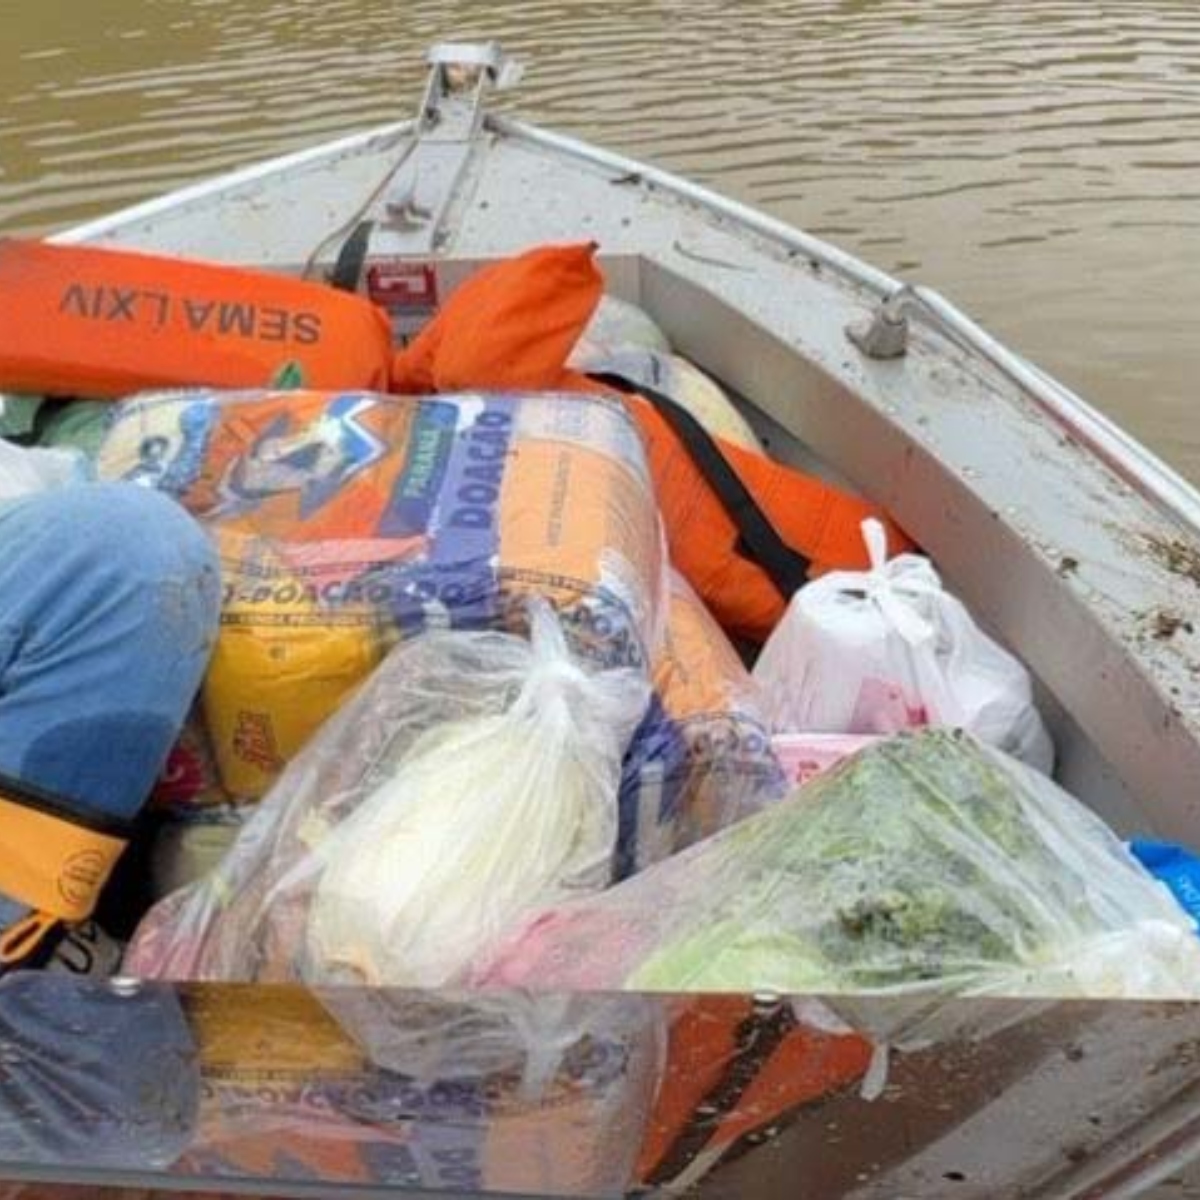  desvio / venda de cestas básicas - enchentes 